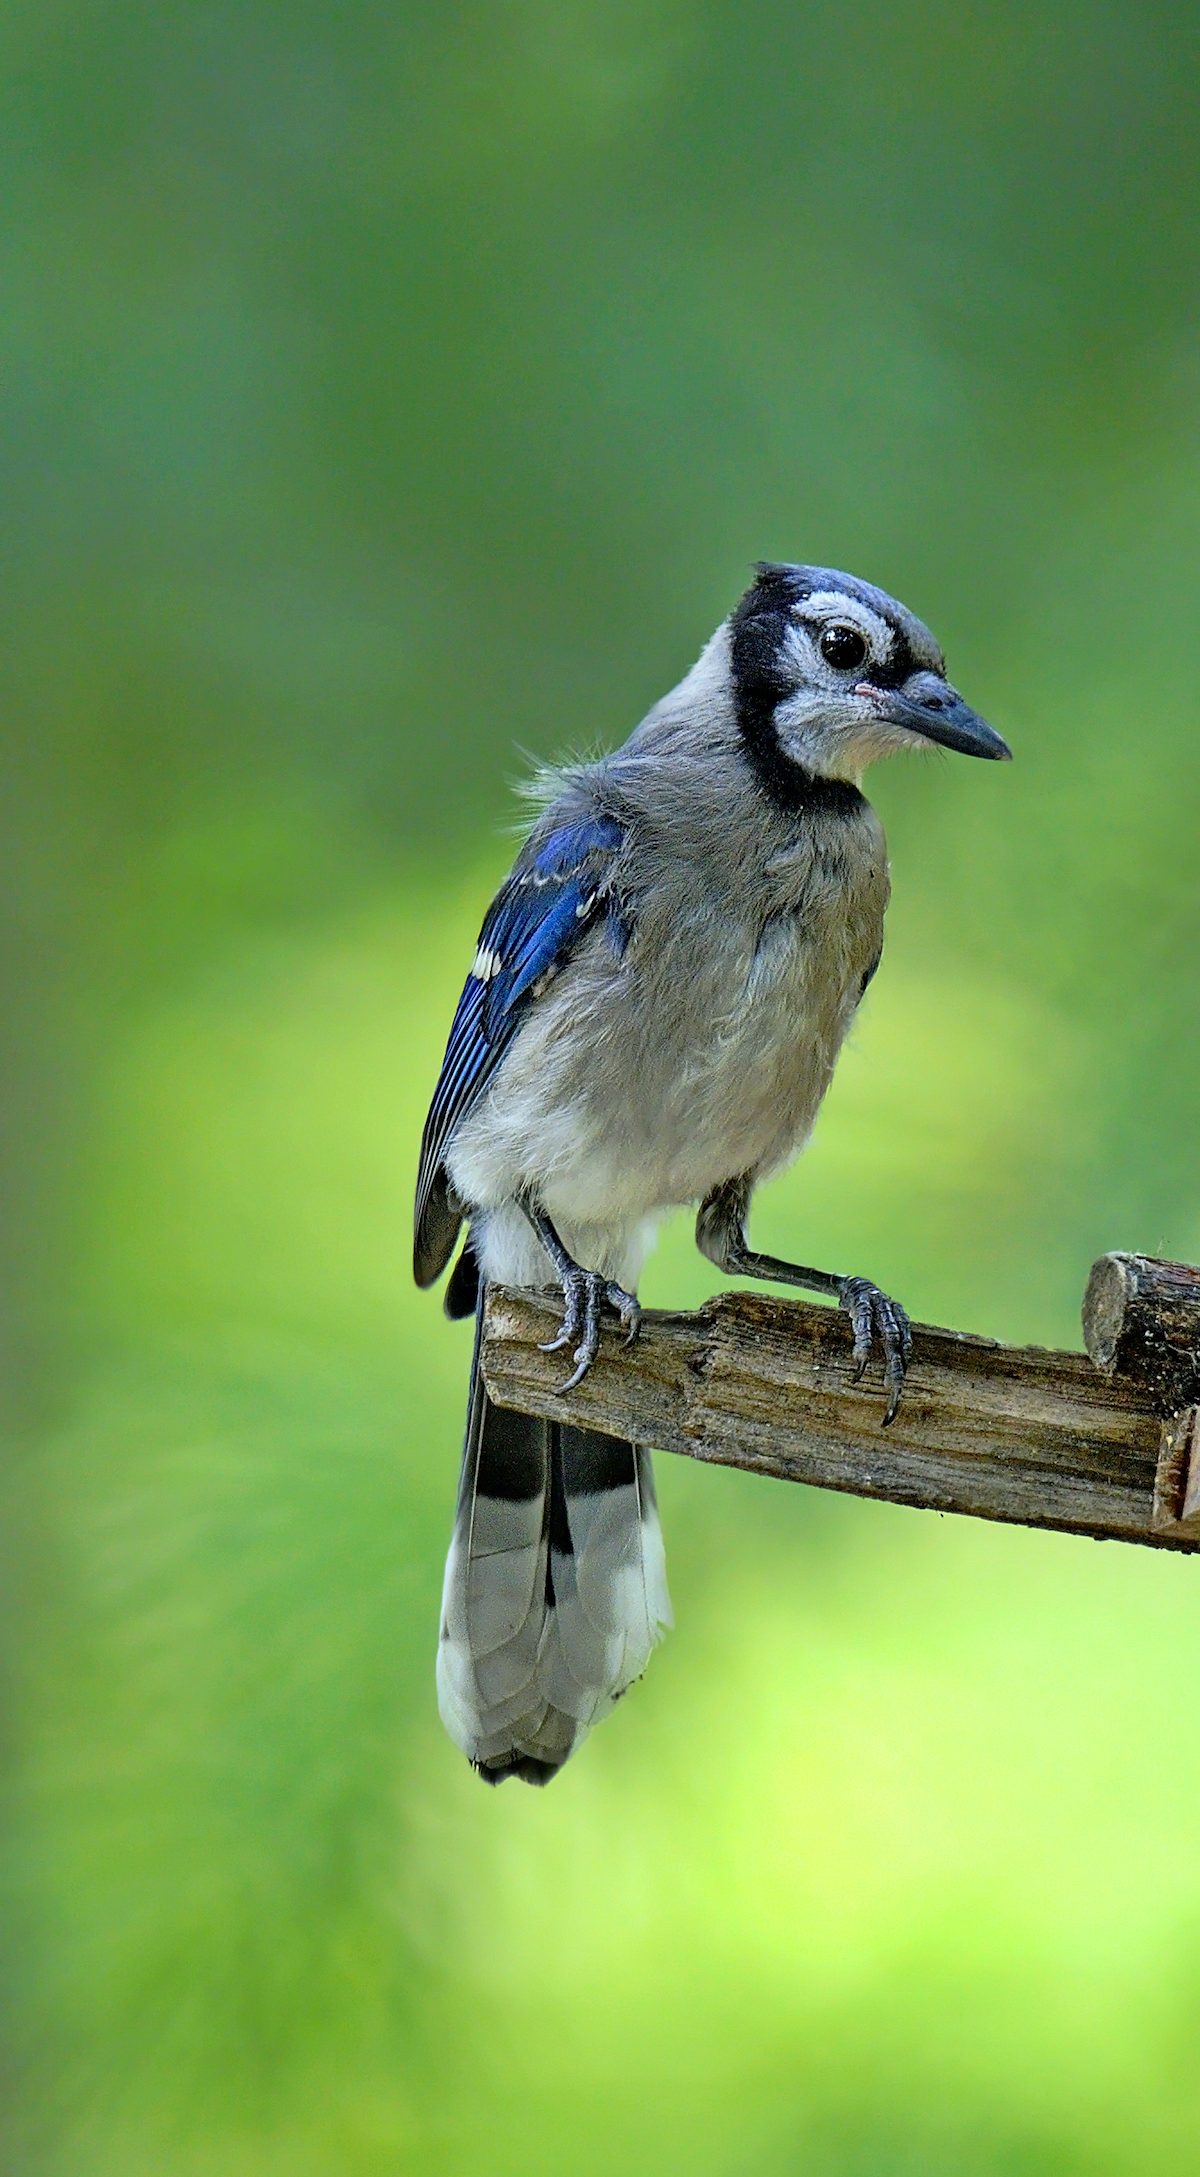 National Audubon Society - It's official! The Toronto Blue Jays